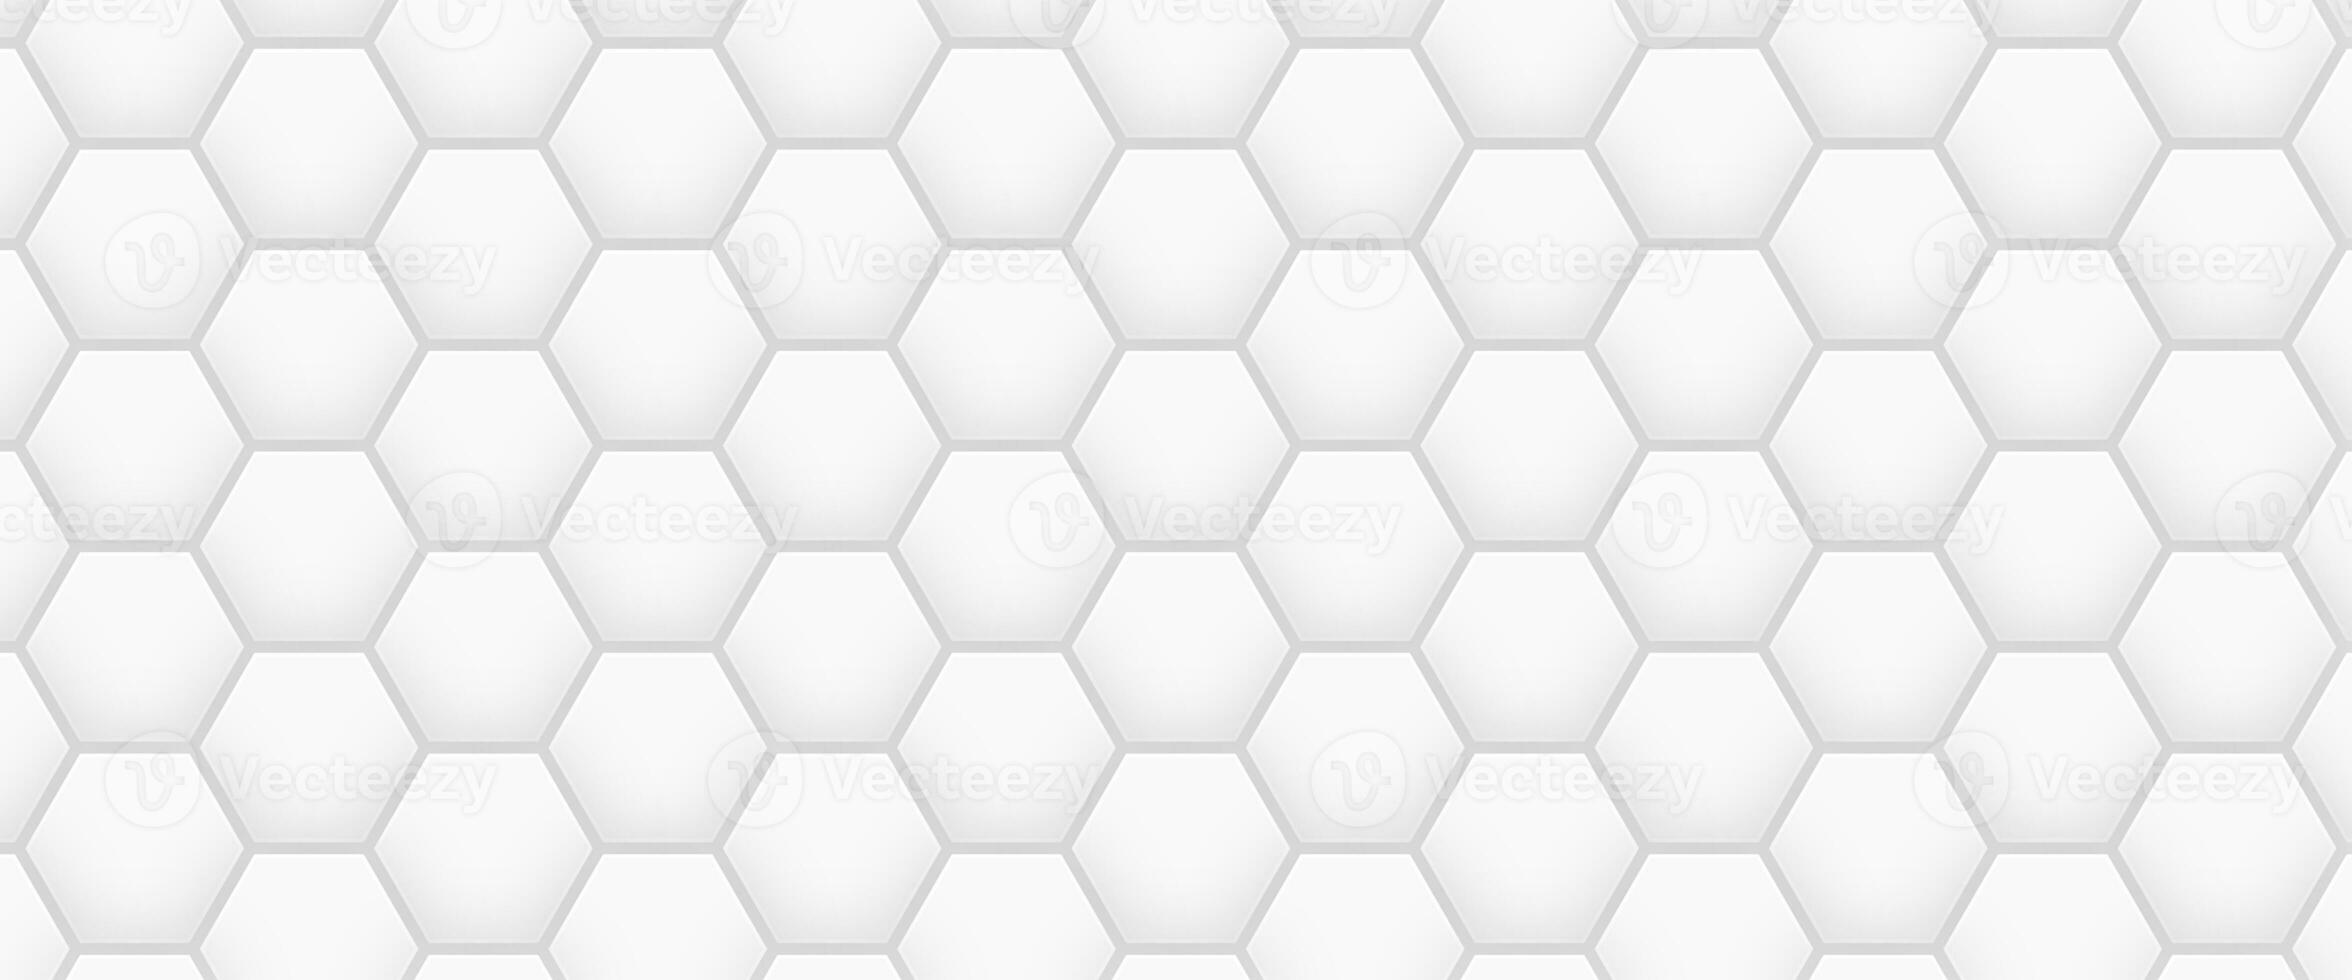 Futuristic honeycomb mosaic white background. Realistic geometric mesh cells texture. photo